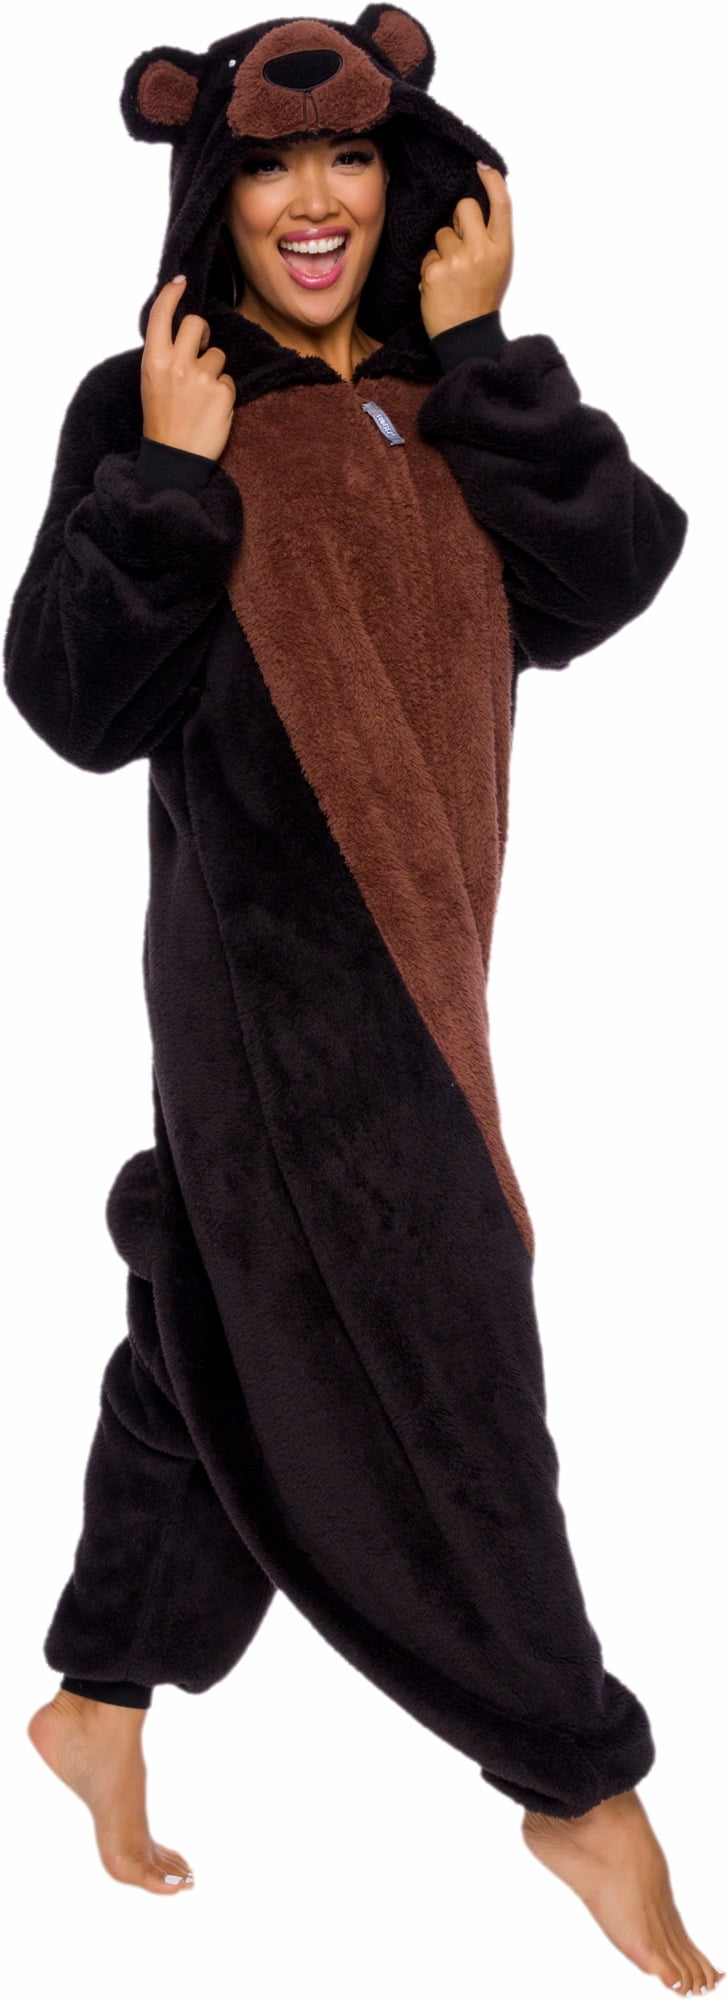 Plush One Piece Cosplay Animal Hoodie Costume S M L XL Wanziee Unisex Brown Teddy Bear Onesie Adult Pajamas 